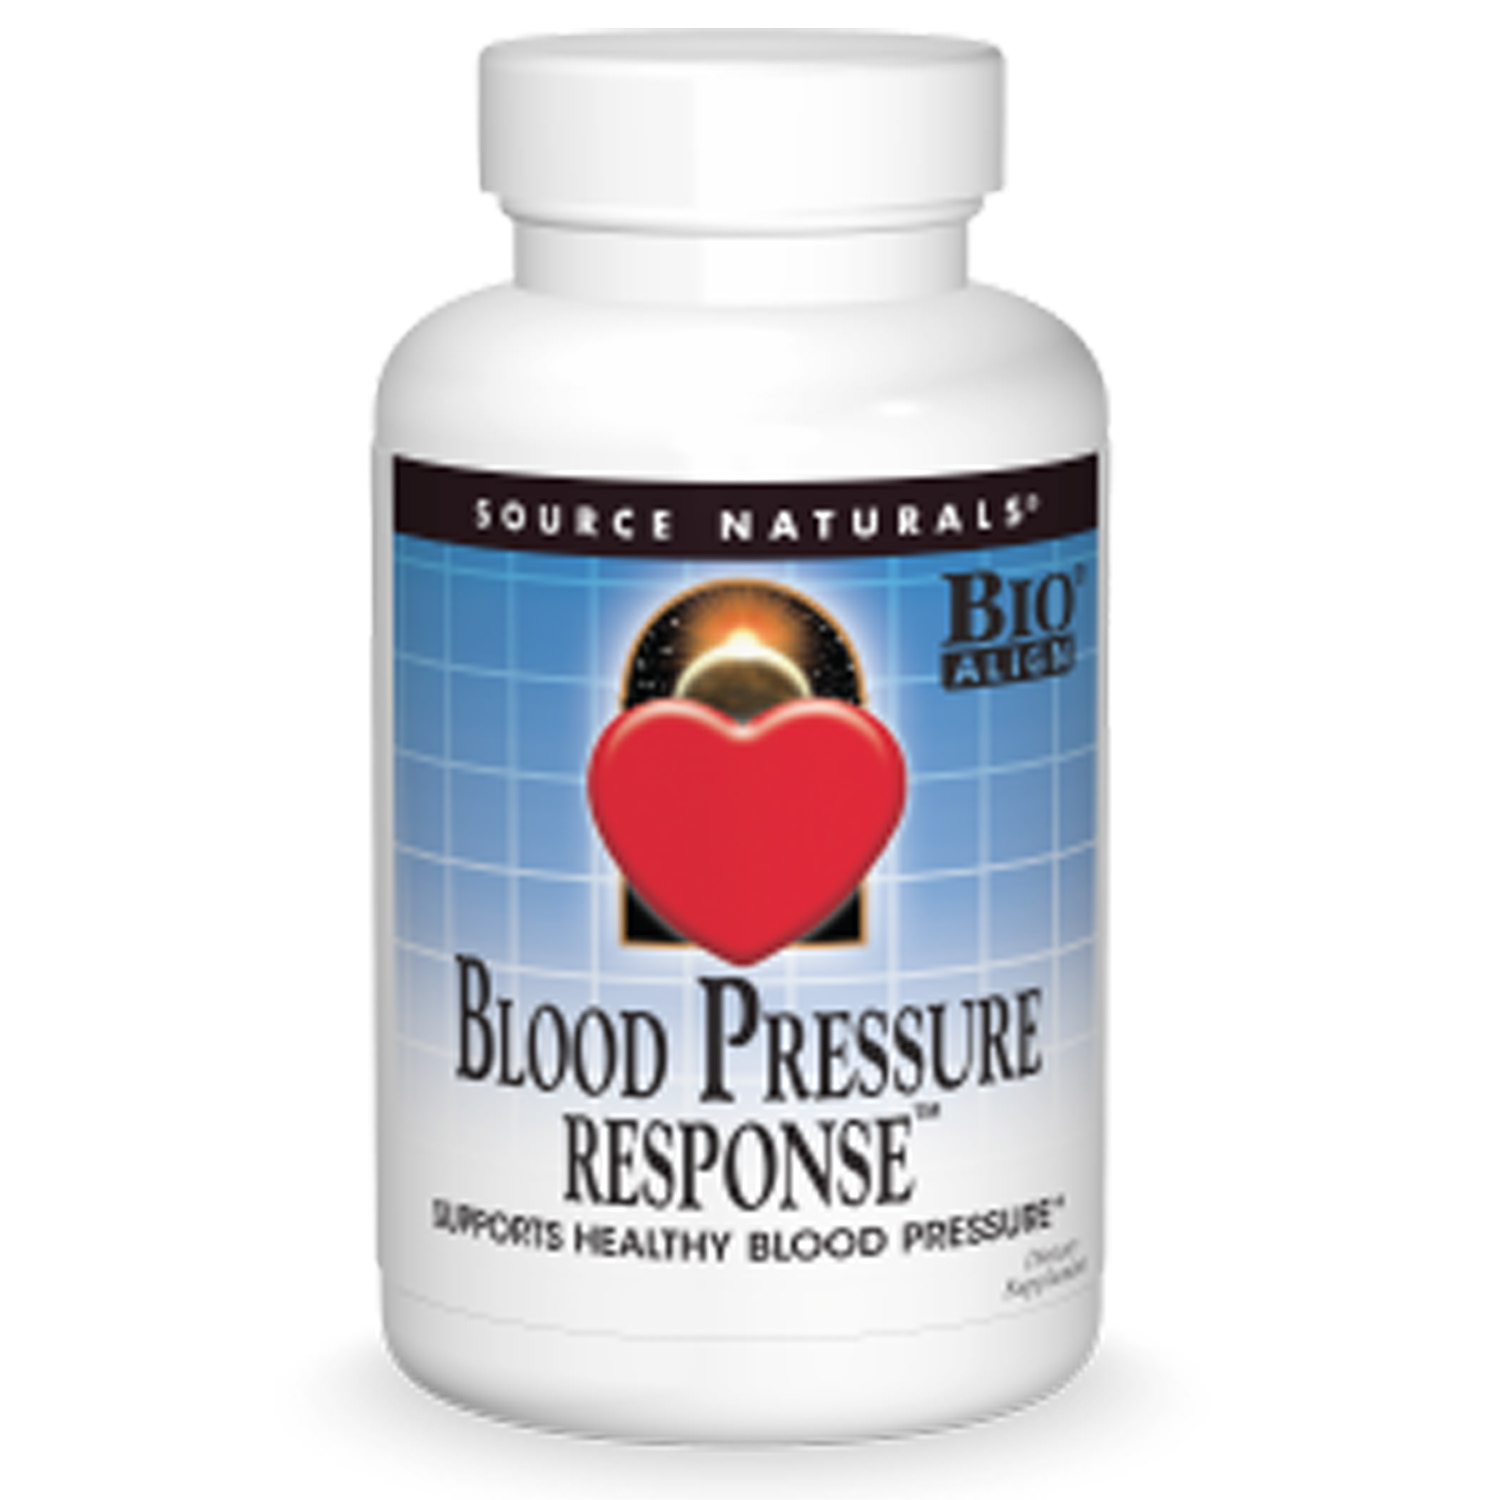 Source Naturals Blood Pressure Response, 60 Tablets